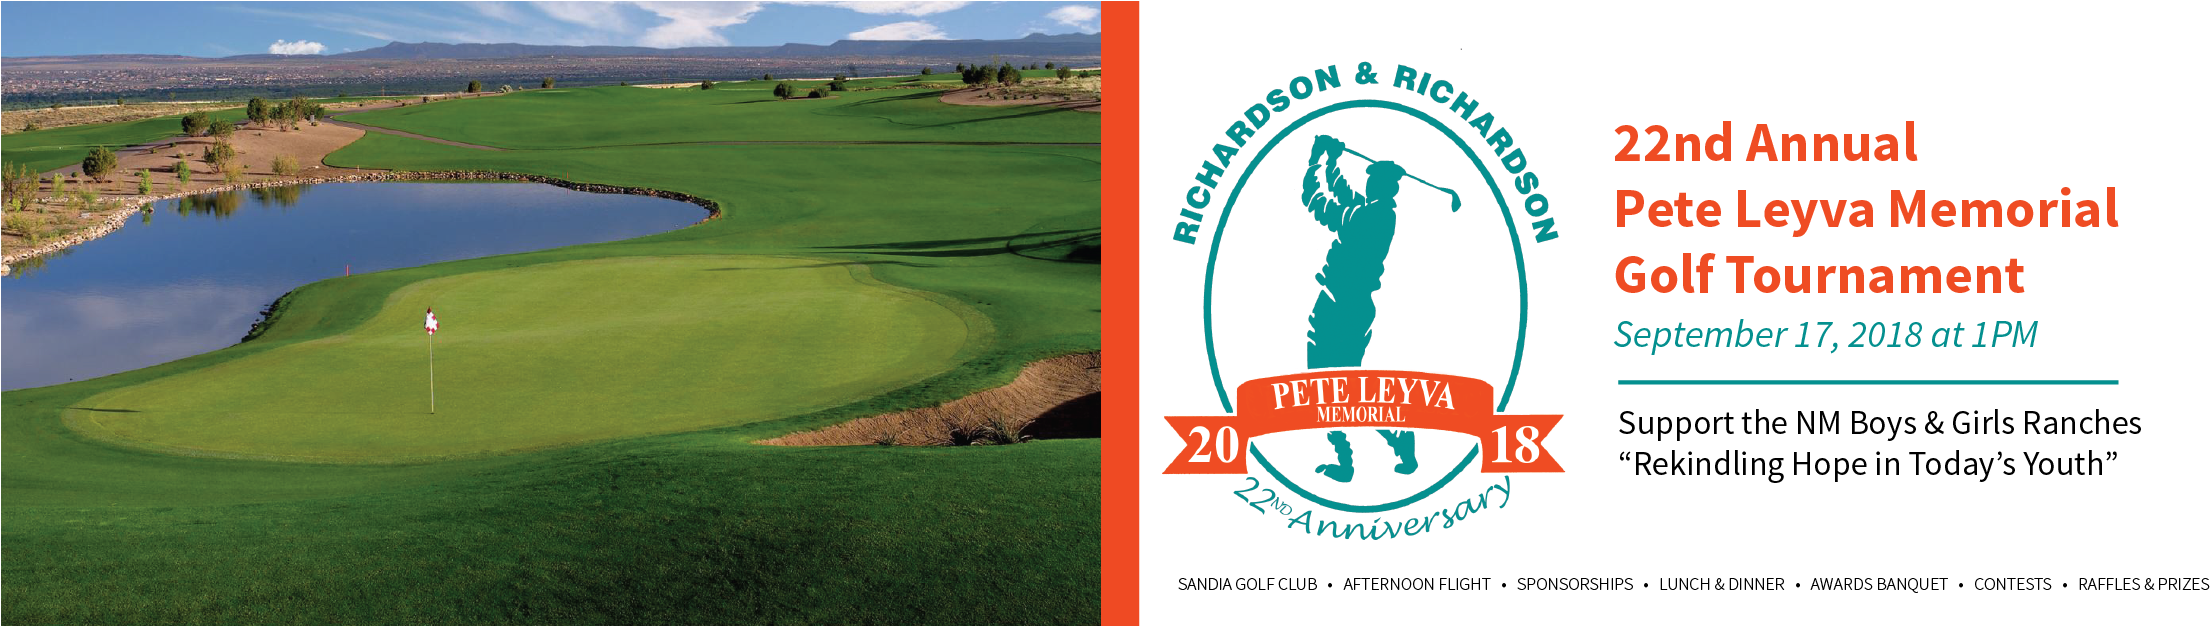 Pete Leyva Memorial Golf Tournament Banner